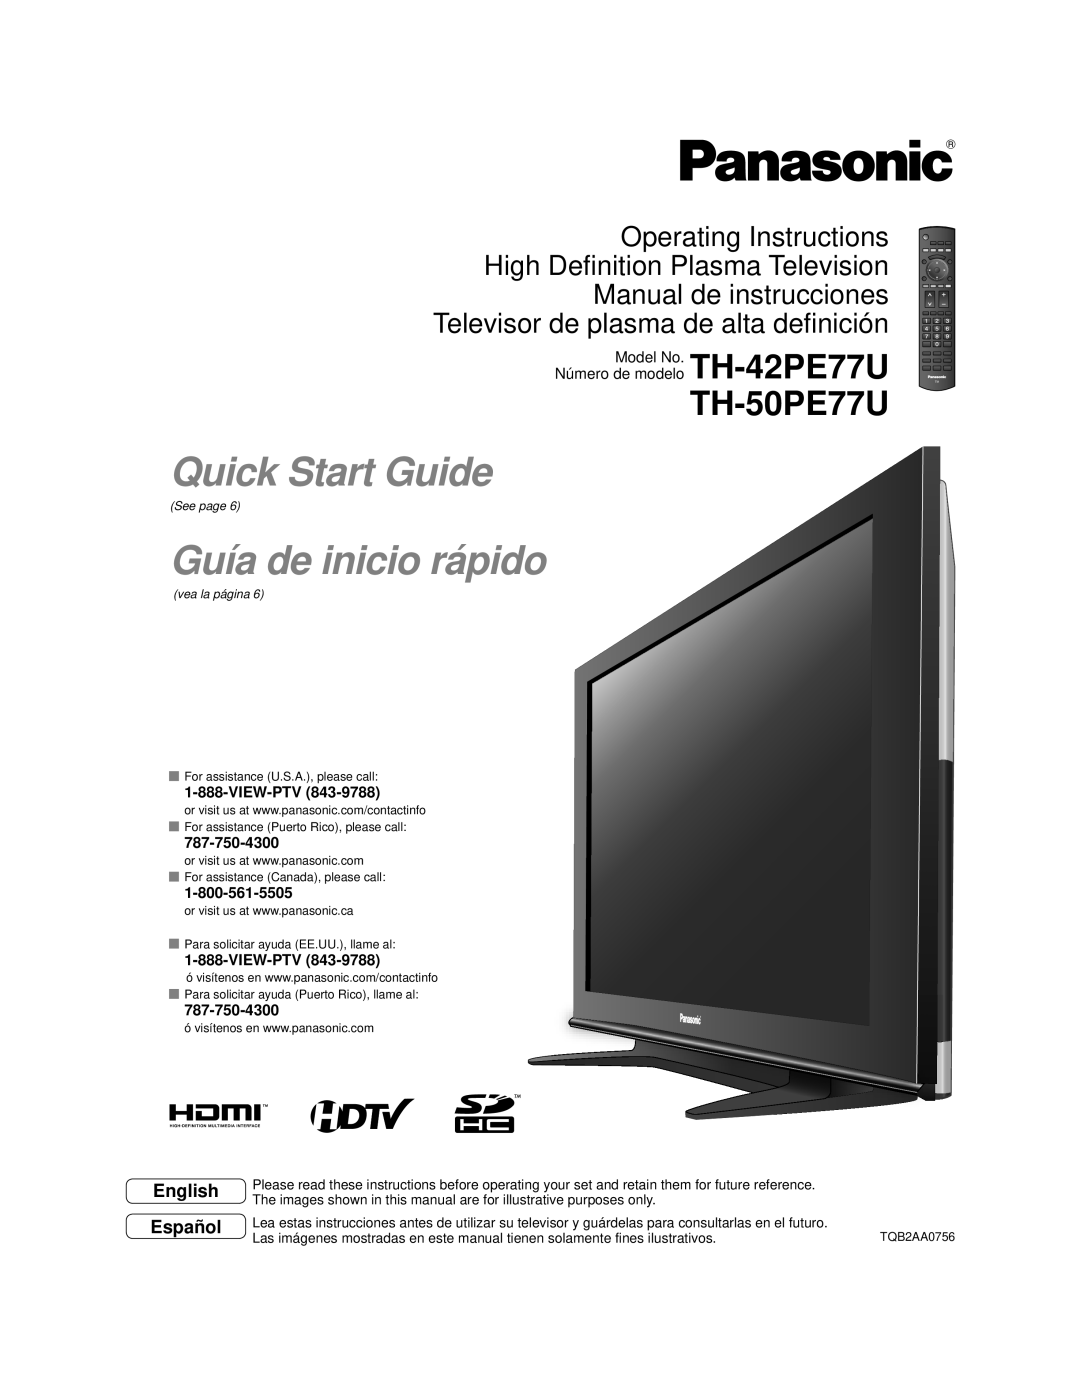 Panasonic TQB2AA0756 quick start English Español, View-Ptv, Quick Start Guide, Guía de inicio rápido 